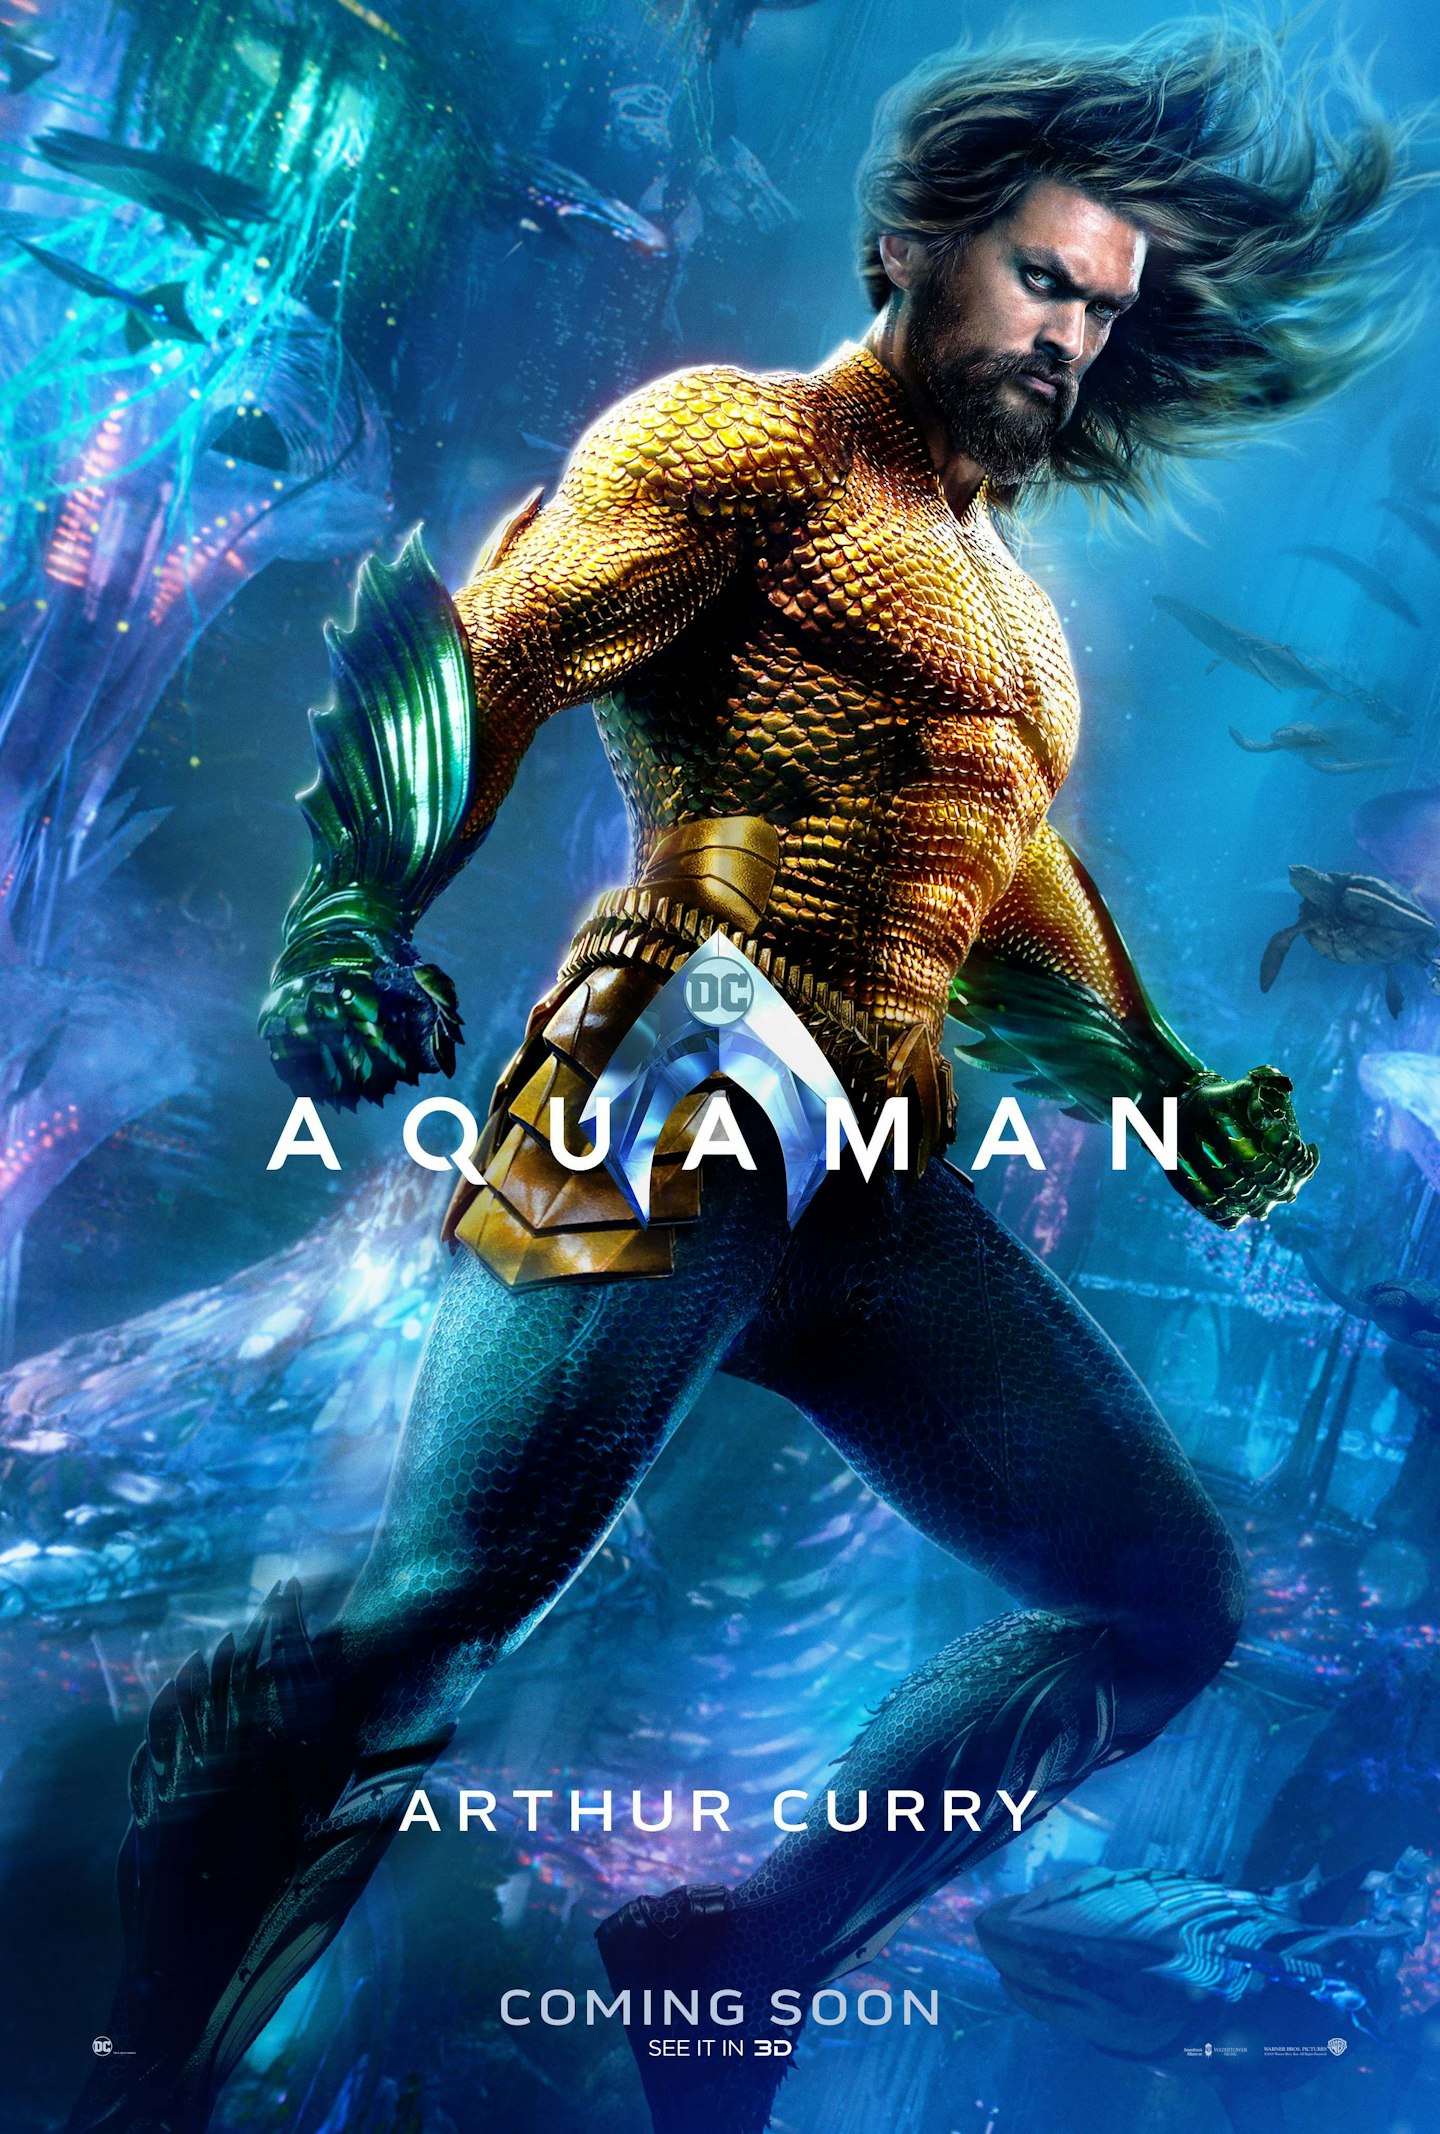 Aquaman character poster – Arthur Curry